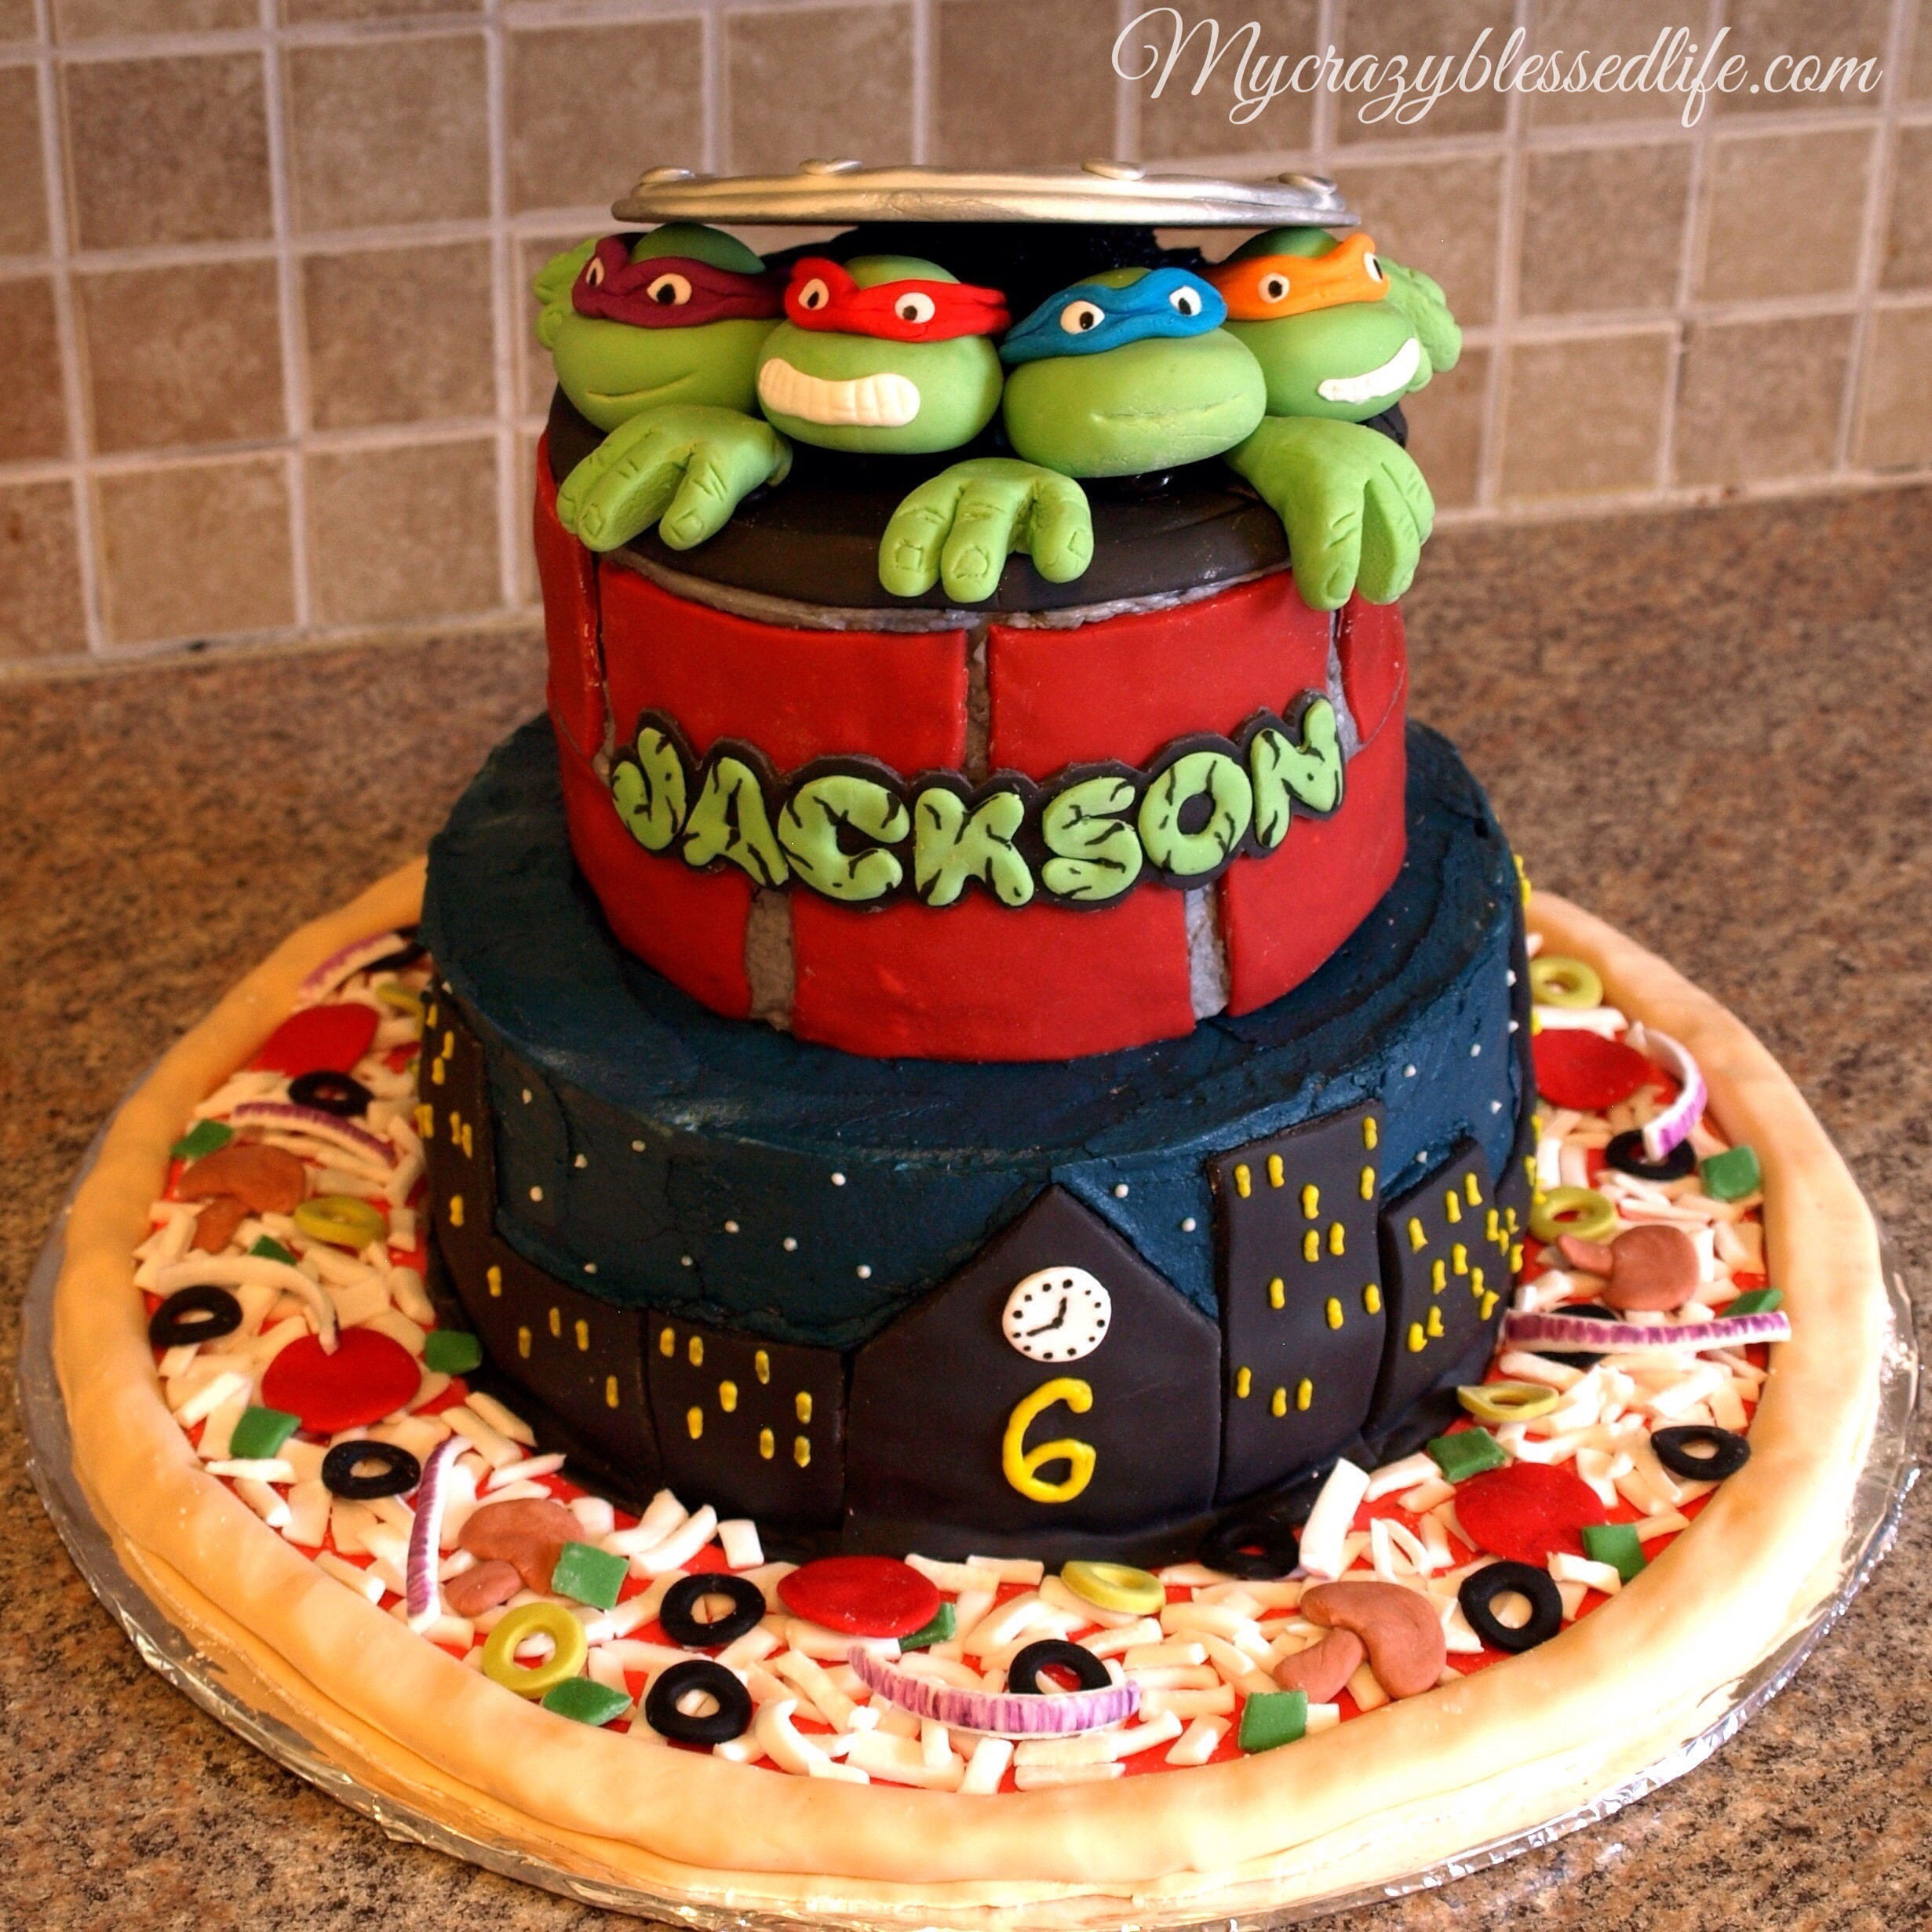 Best ideas about Ninja Turtles Birthday Cake
. Save or Pin FREE Printable Ninja Turtle Birthday Party Invitations Now.